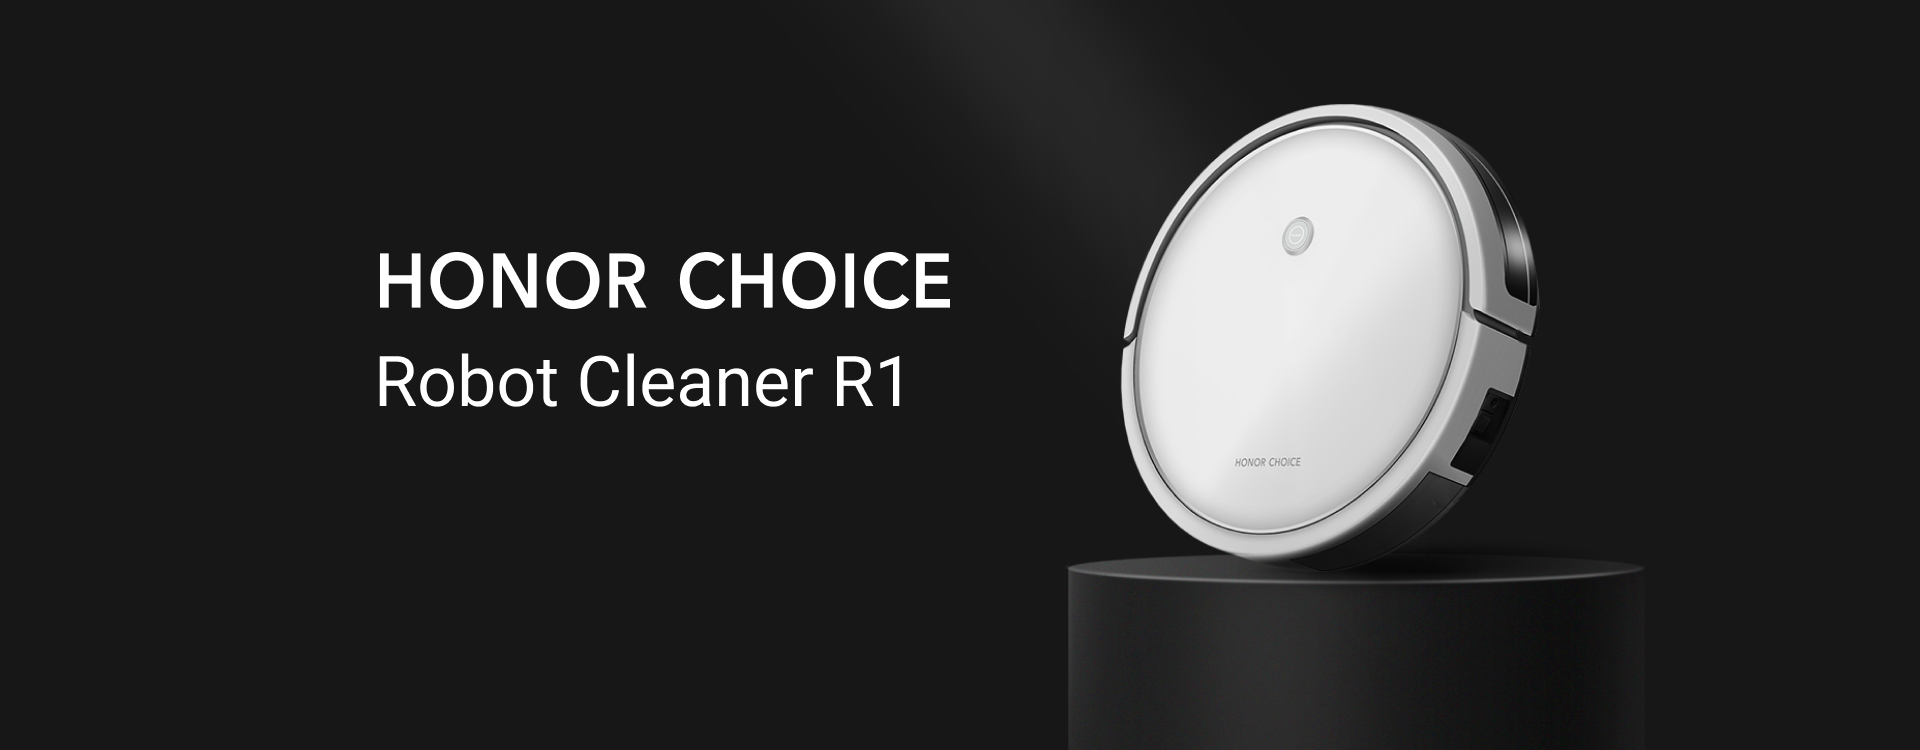 Пылесос honor choice r2 отзывы. Робот пылесос хонор choice. Робот-пылесос Honor choice Robot Cleaner r1. Робот пылесос хонор r1. Honor choice Cleaner r1.